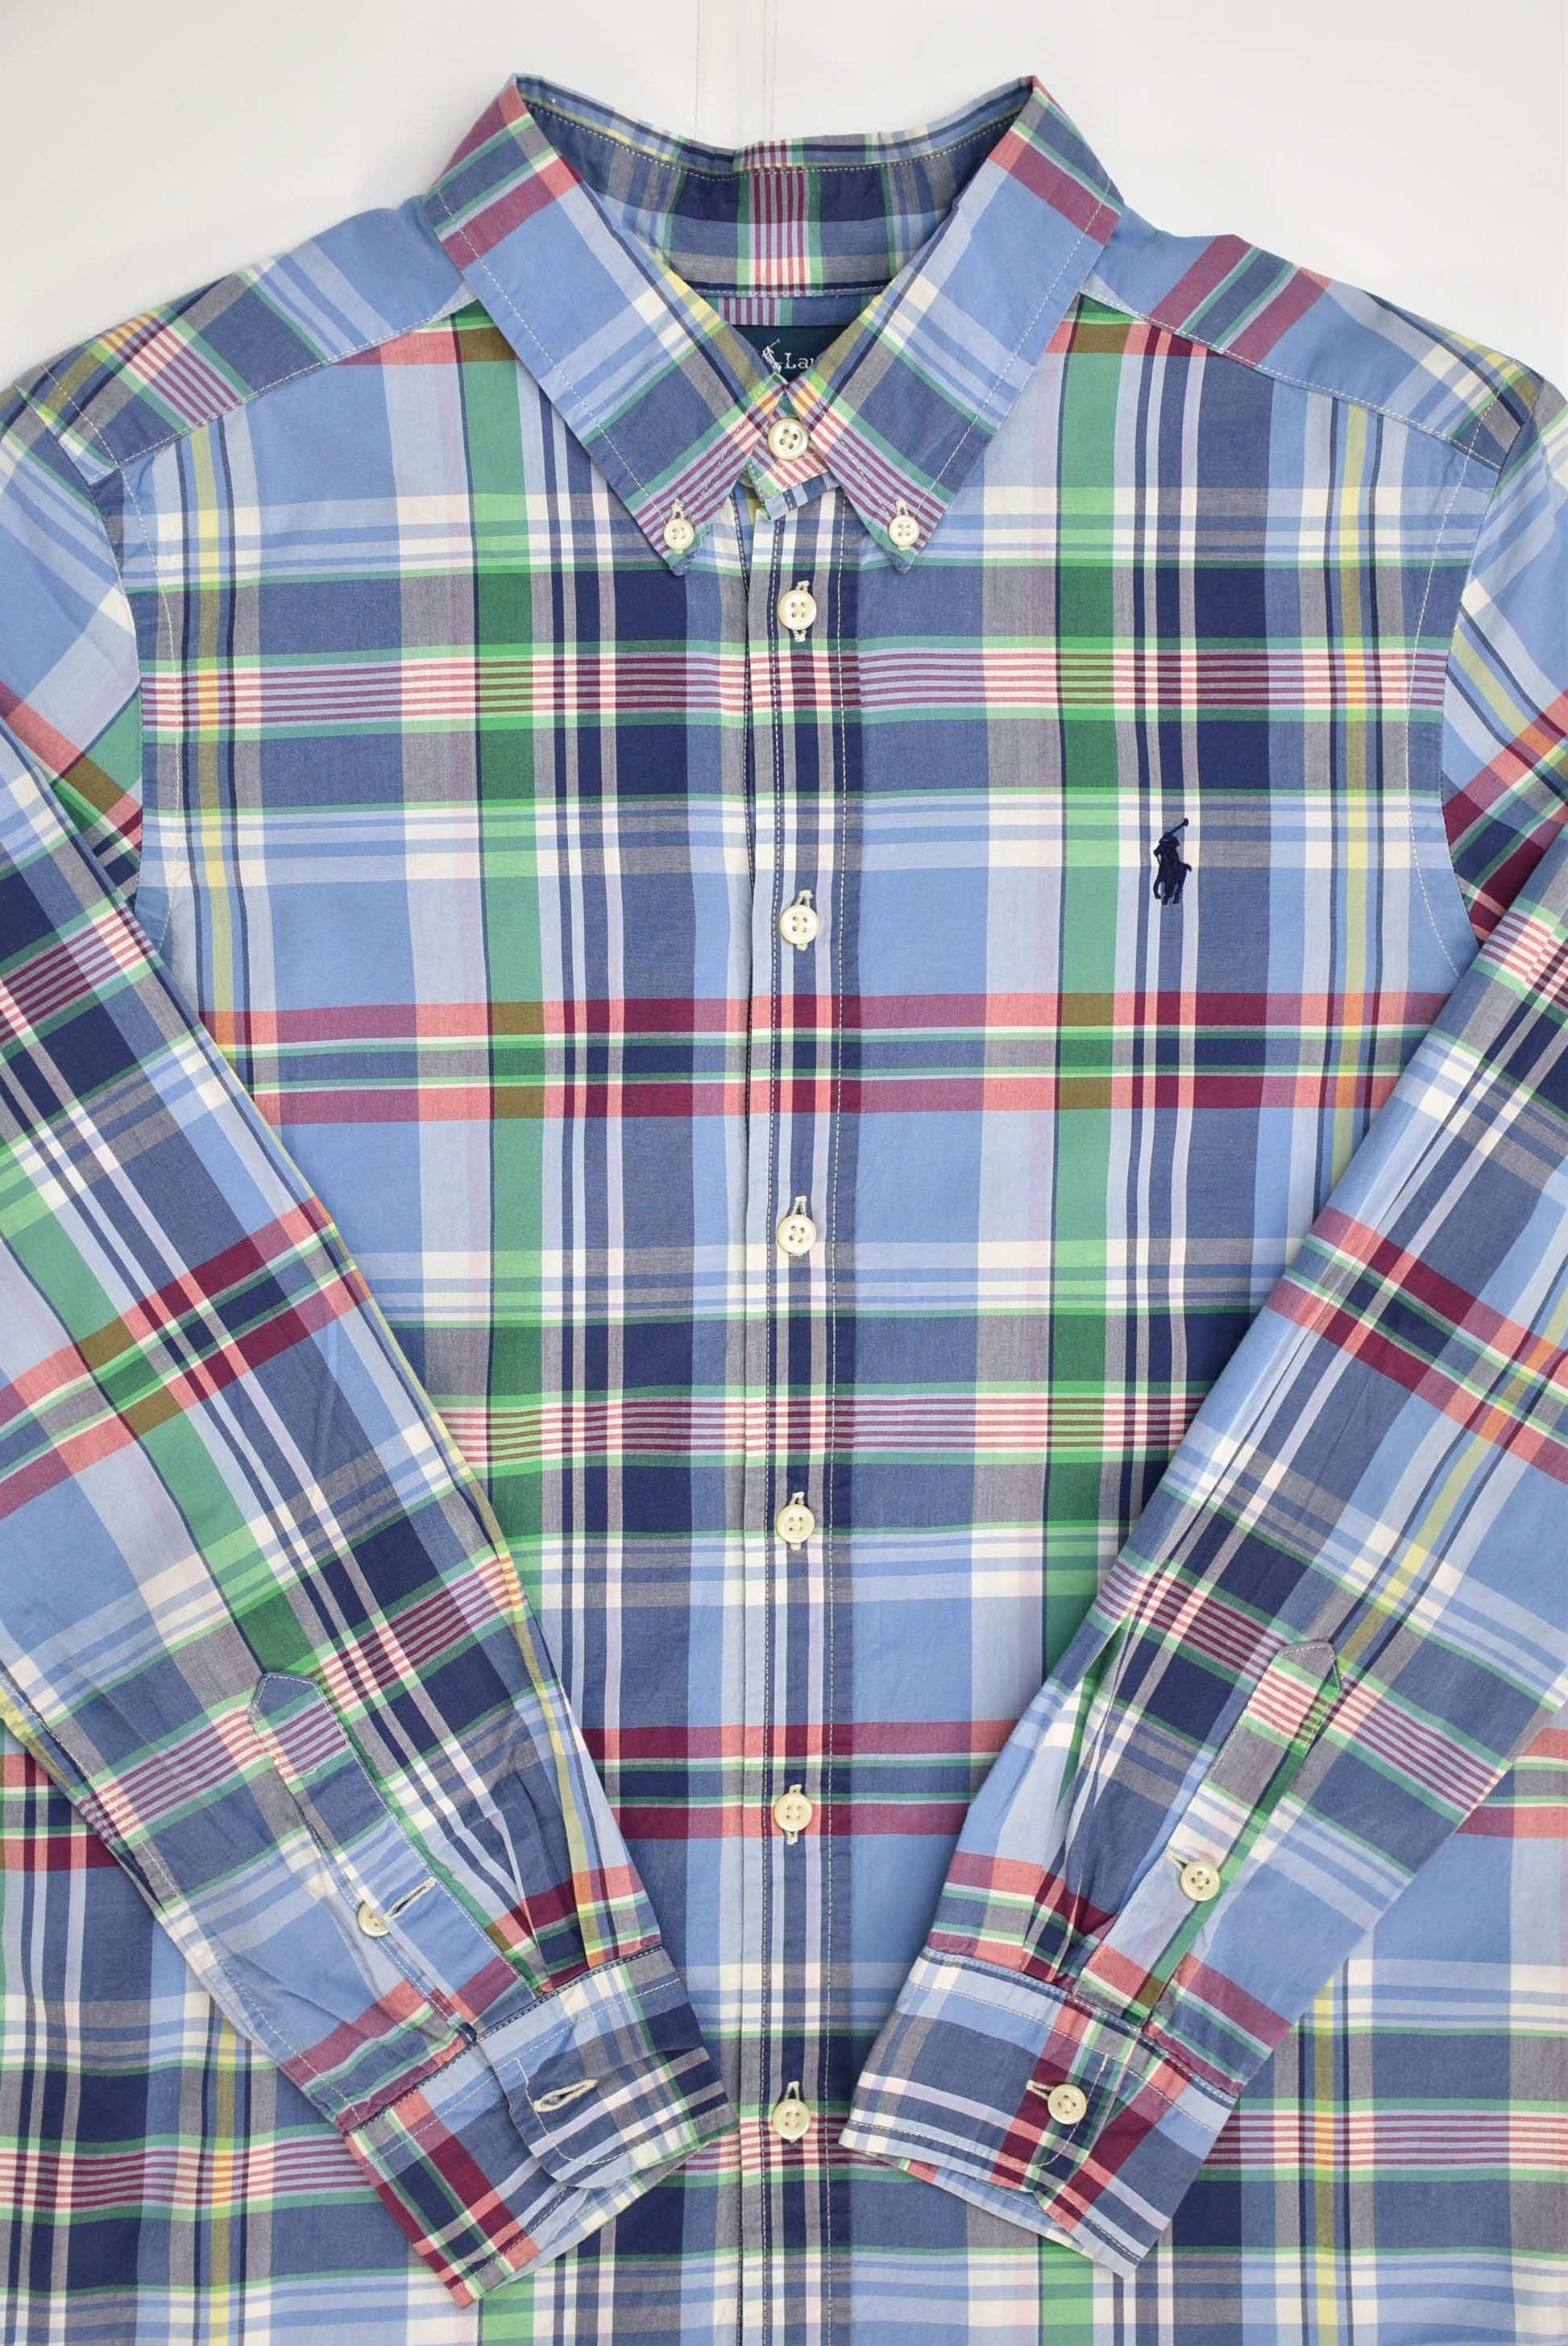 Polo Ralph Lauren Shirt (kids L/ adult XS) - Slayyy Vintage